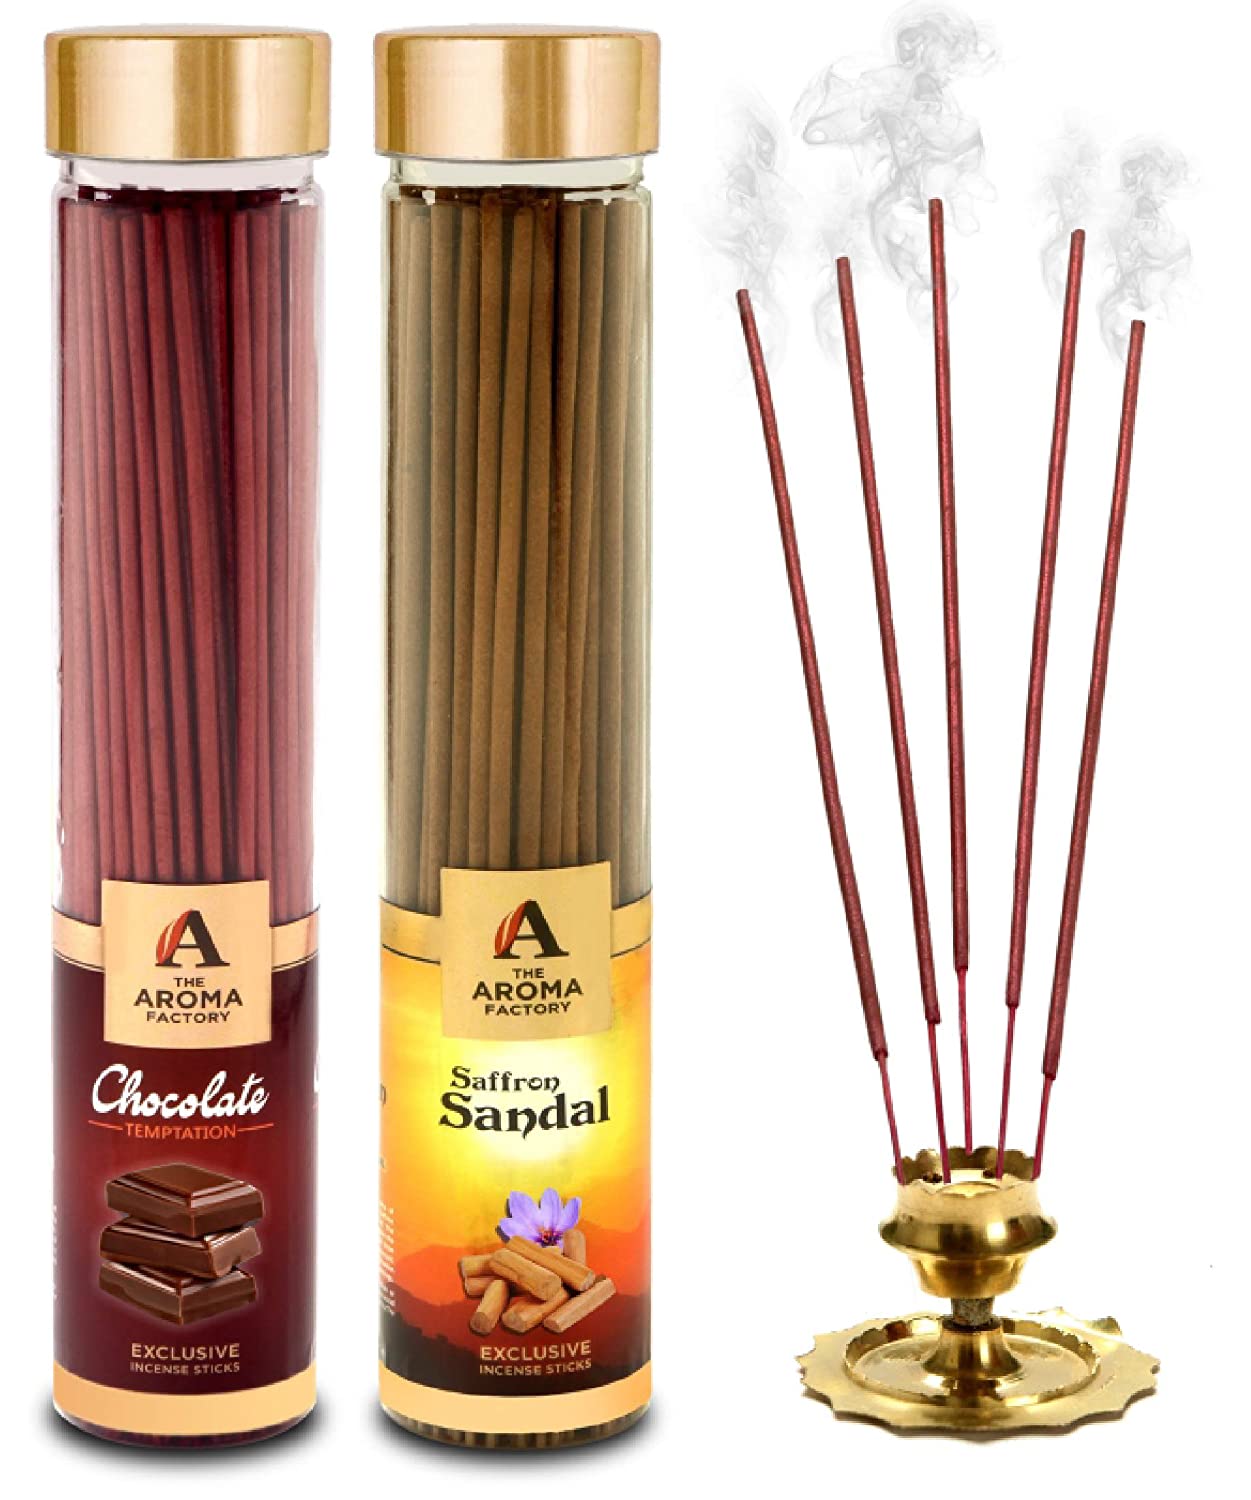 The Aroma Factory Chocolate & Kesar Chandan Saffron Sandal Agarbatti (Charcoal Free & Low Smoke) Bottle Pack of 2 x 100